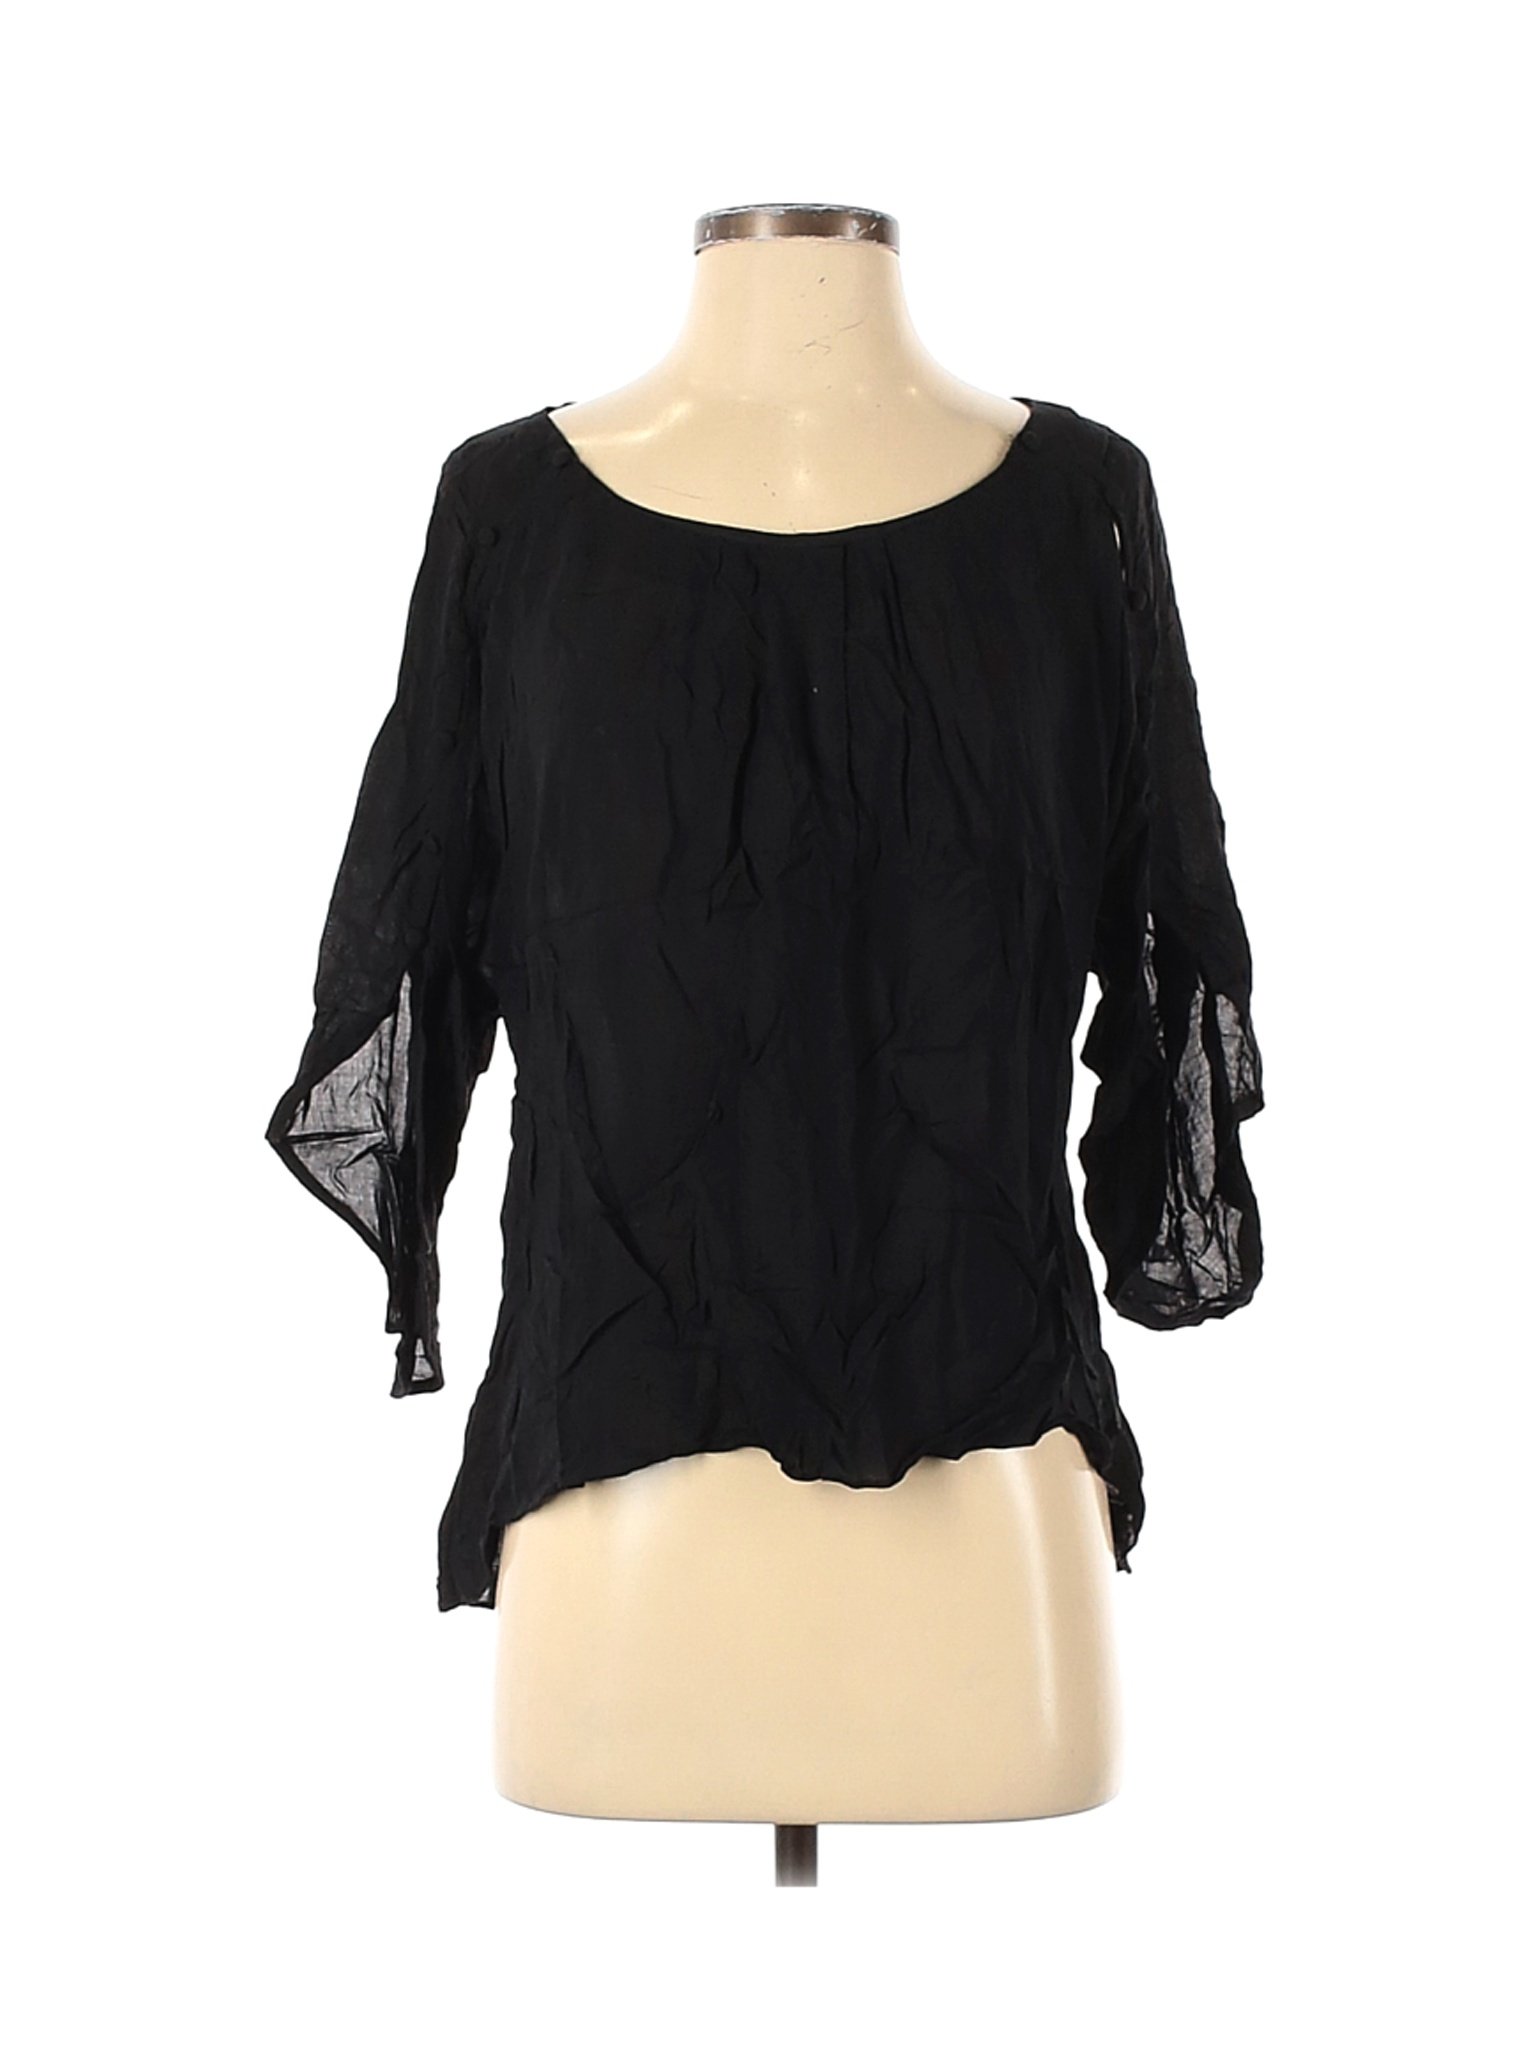 Maeve Women Black 3/4 Sleeve Blouse S | eBay